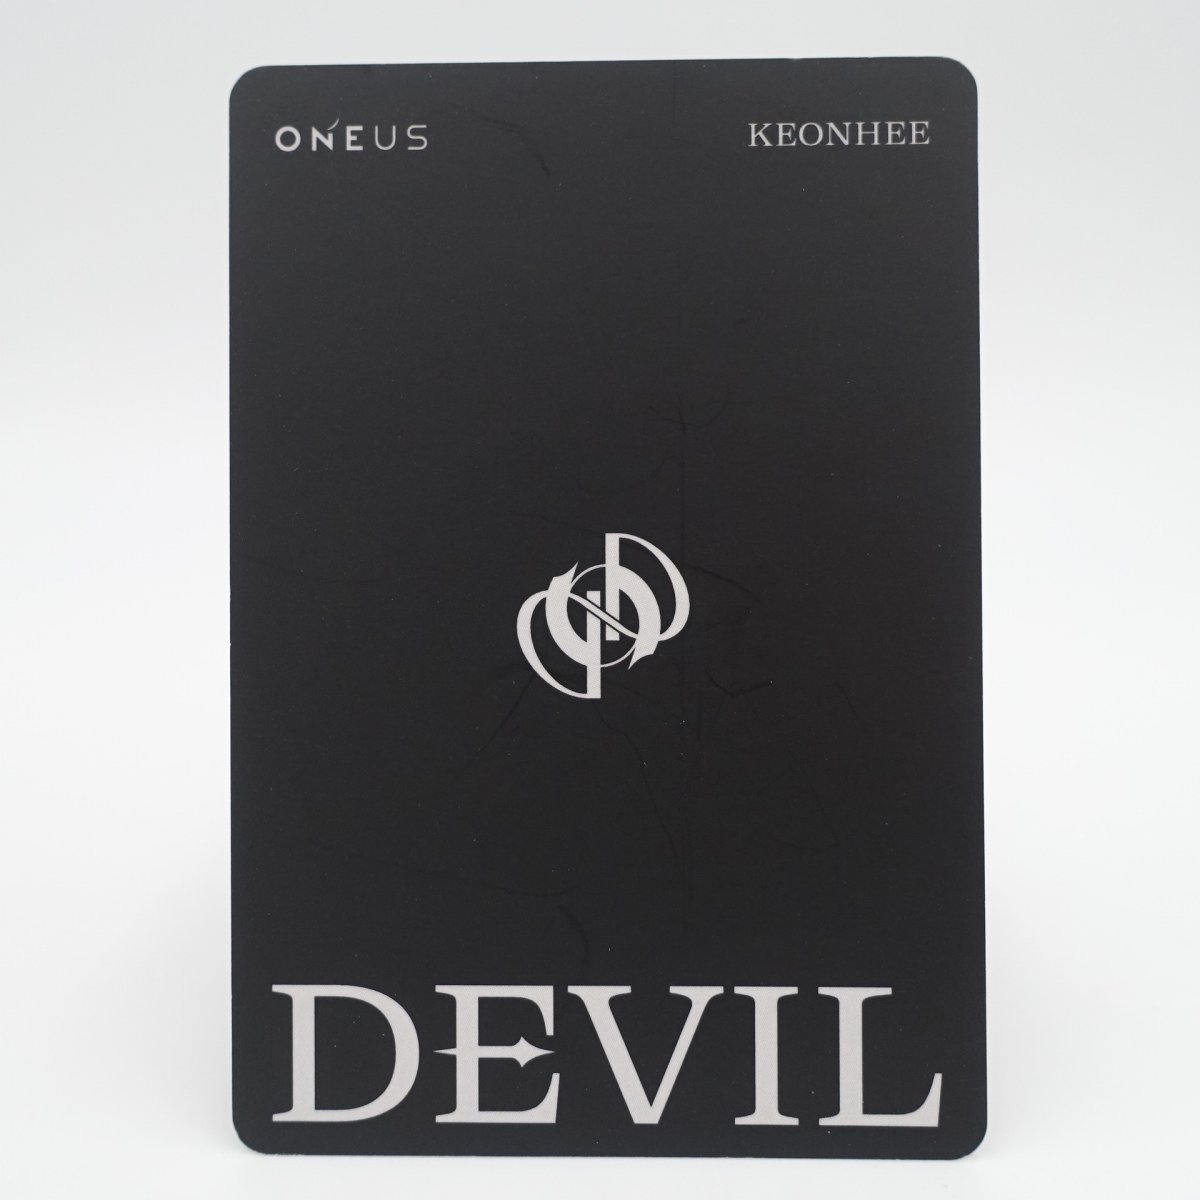 ONEUS ワナス/1st full album DEVIL/GREEN ver. PHOTO BOOK フォトブック/ヨントン トレカ カード/KEONHEE コンヒ/6337_画像5